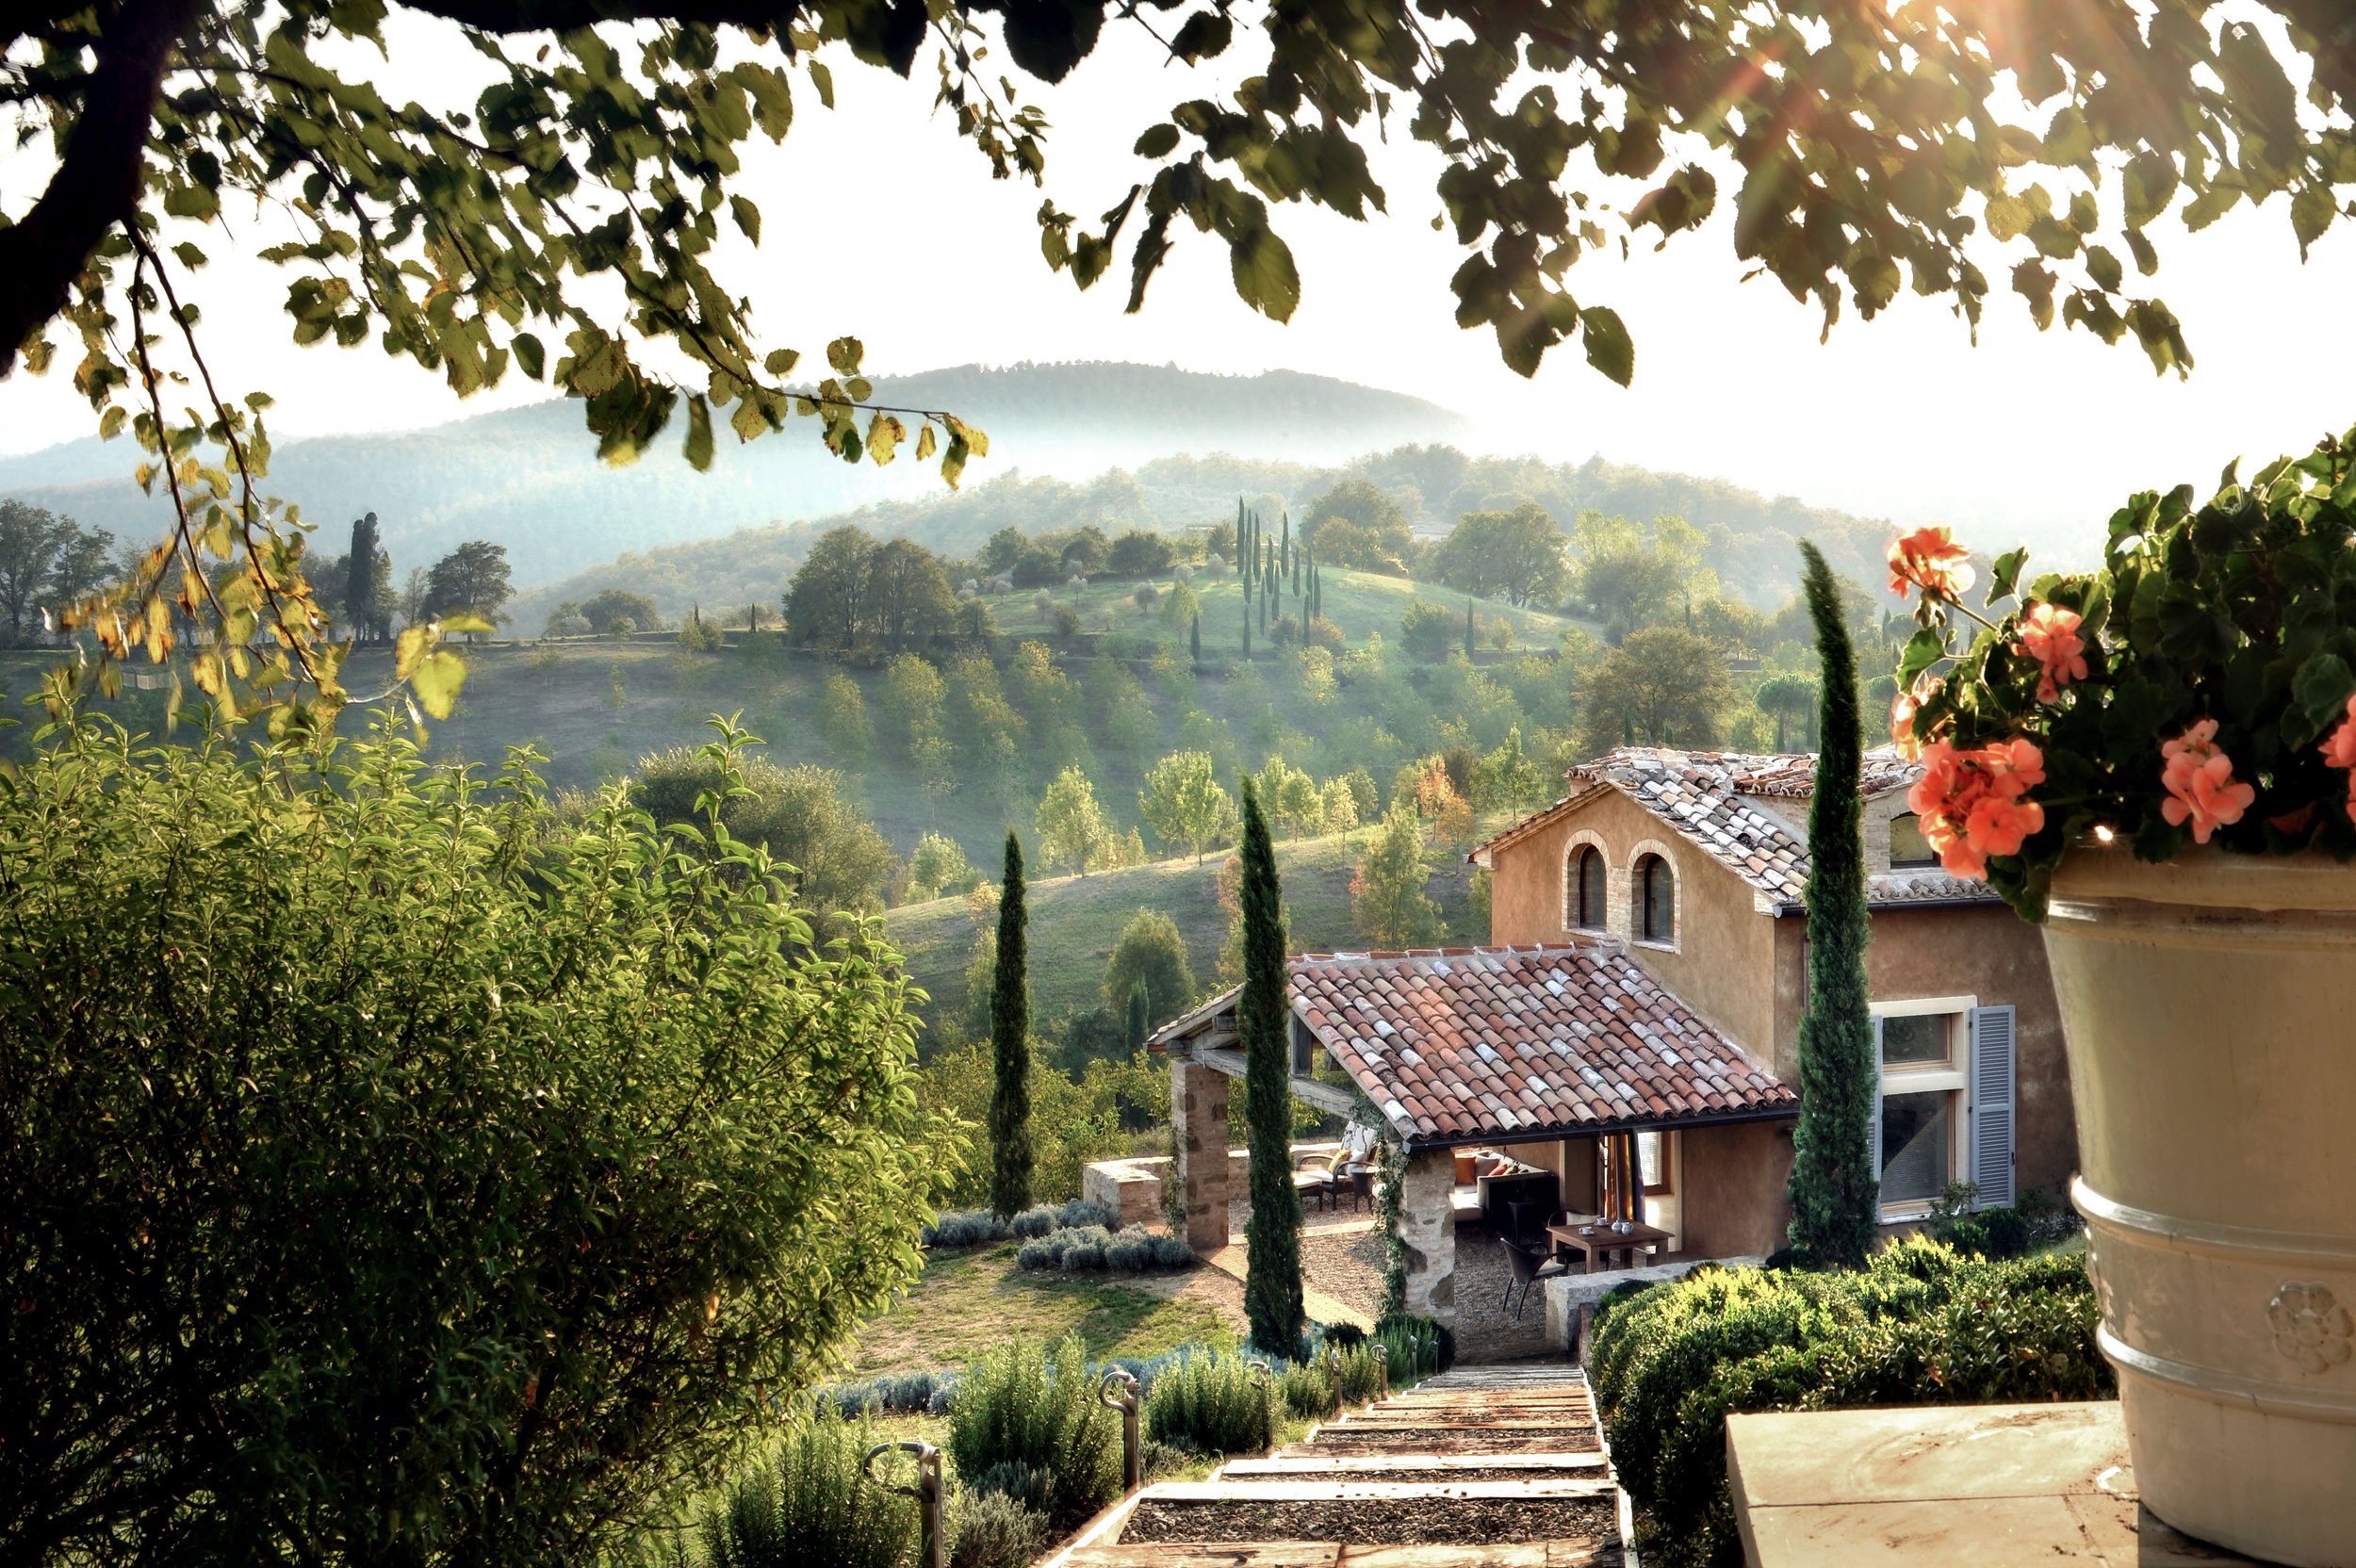 Francis York Exclusive Luxury Villa Rental in Umbria, Italy 27.jpg